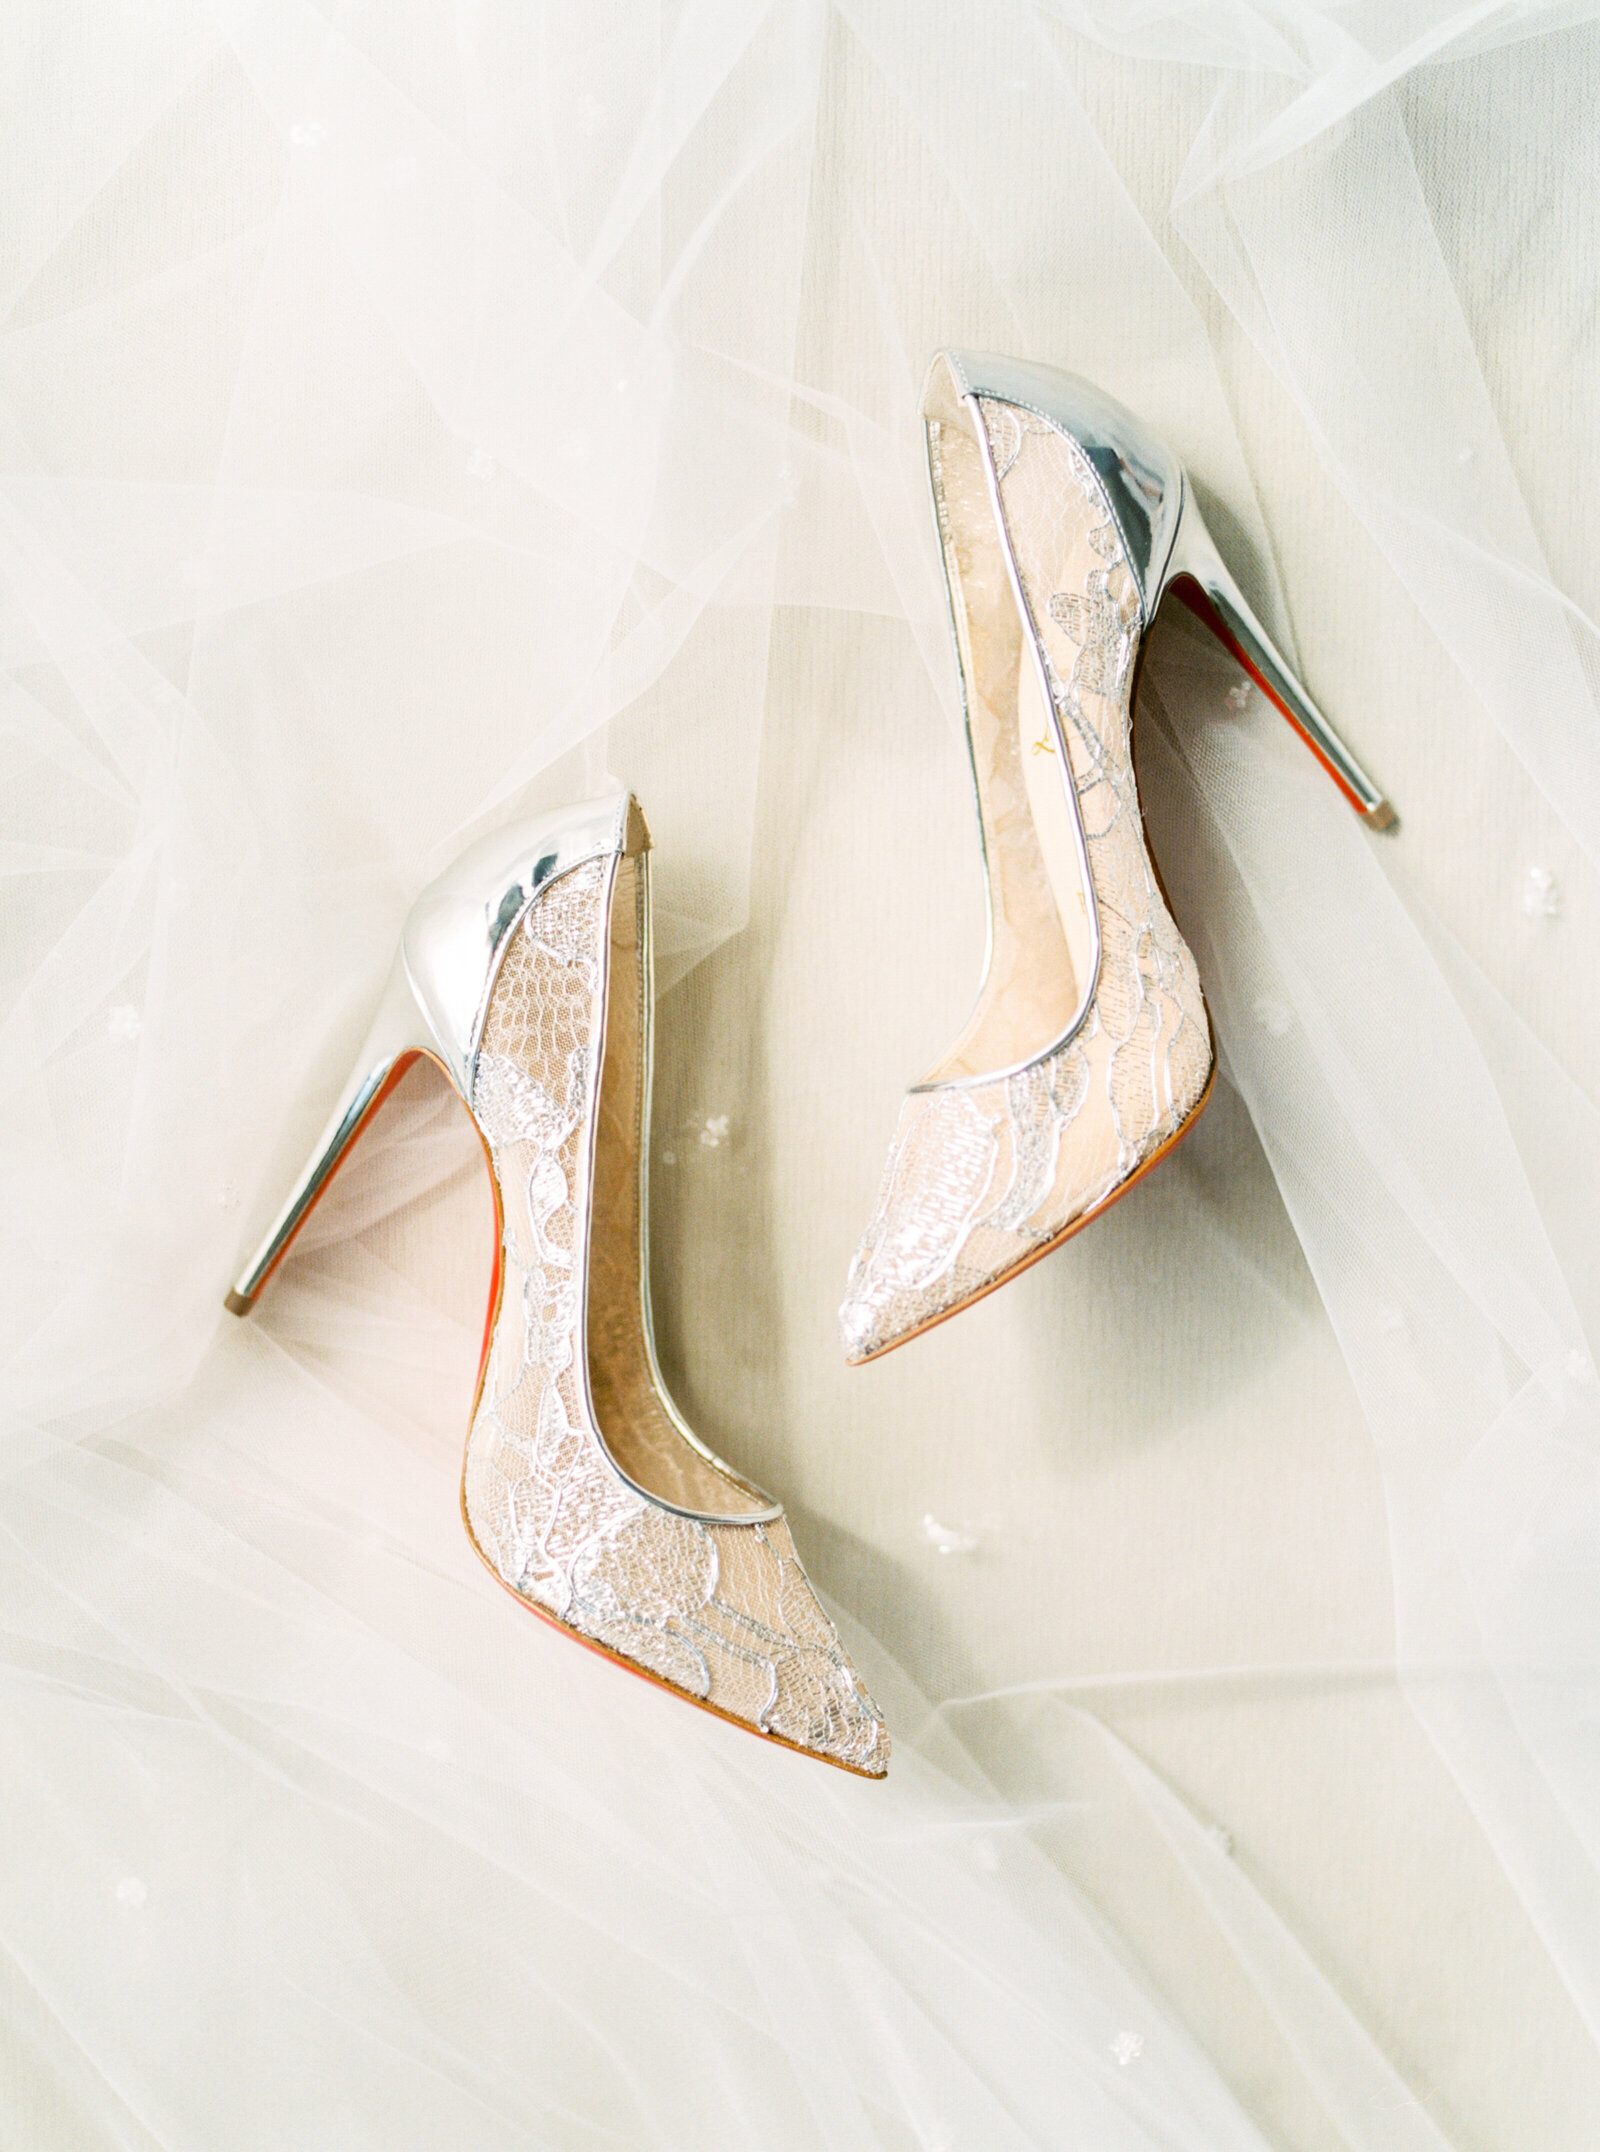 006-sean-cook-wedding-photography-louboutin-bridal-shoes